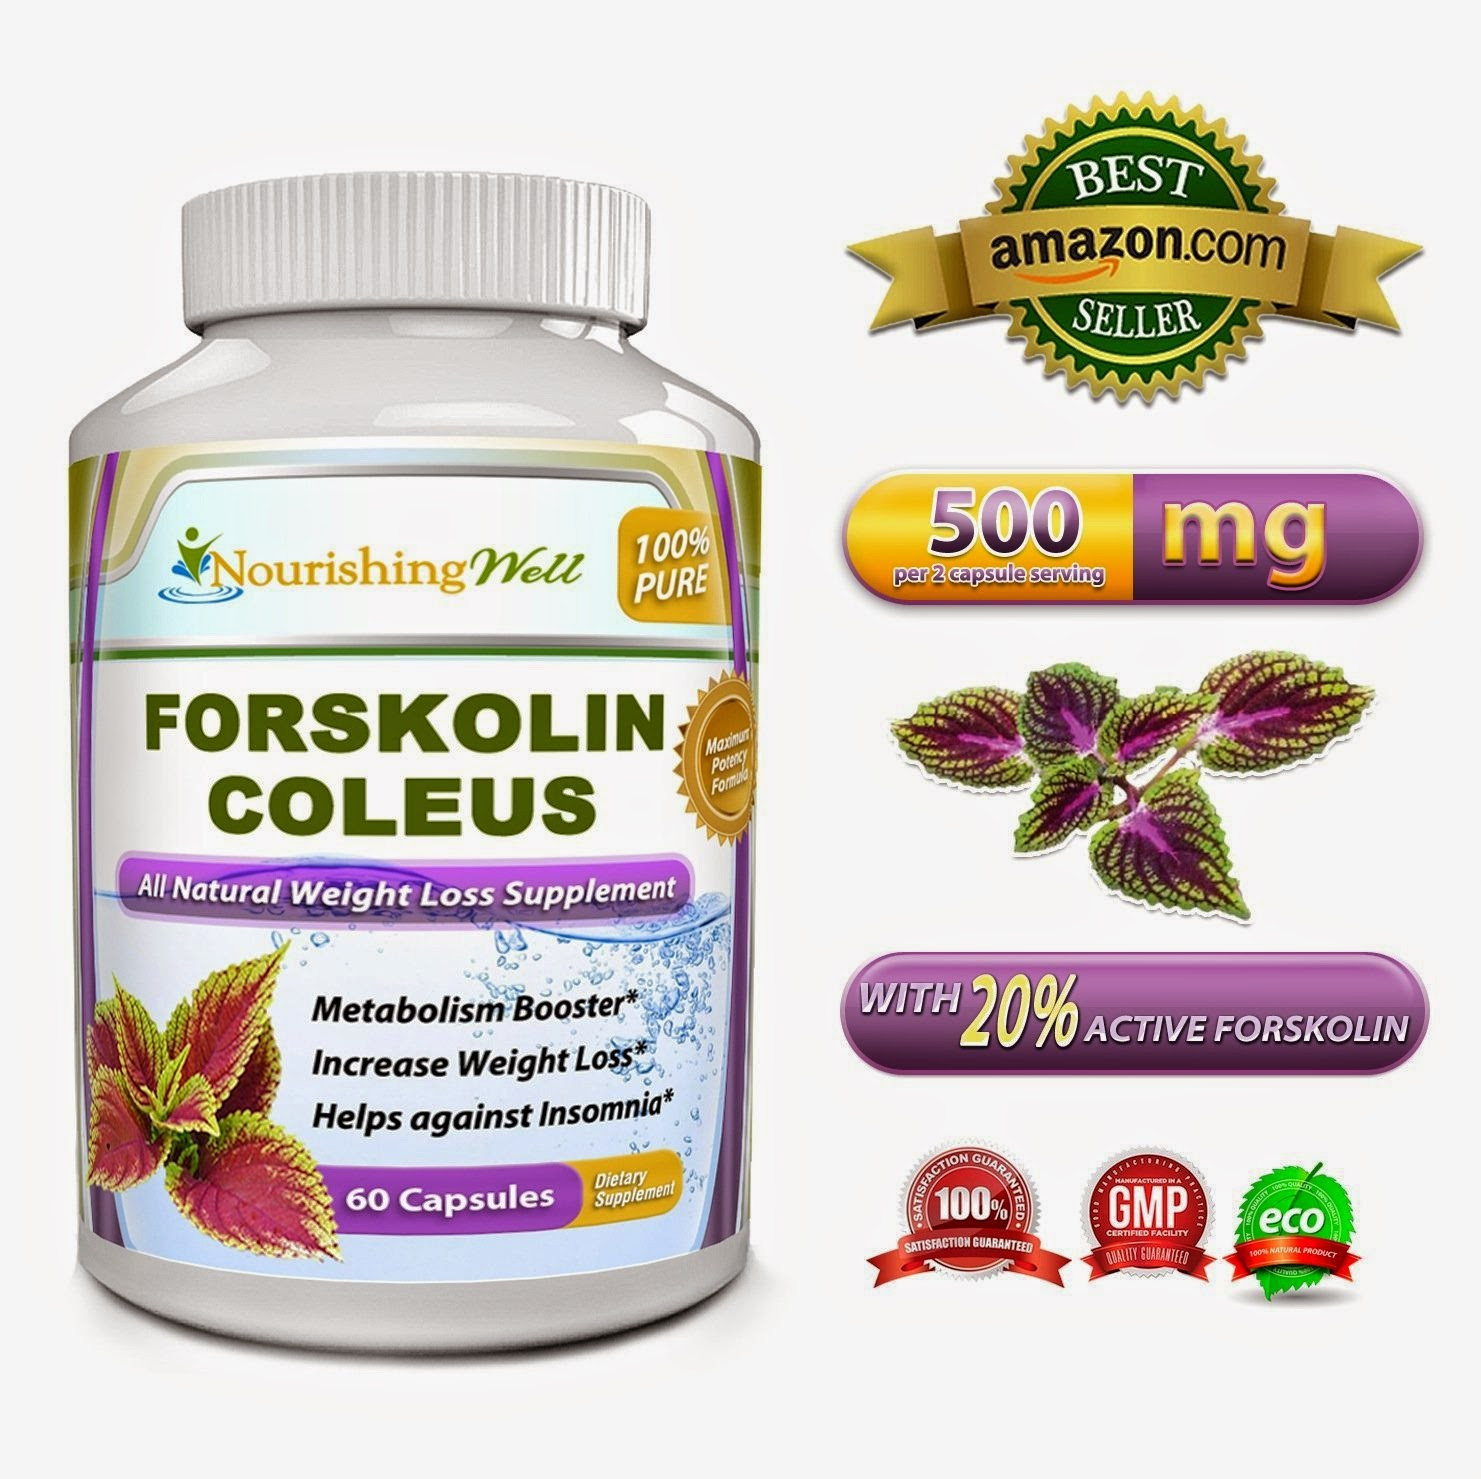 All Natural Weight Loss Supplements
 WINNER ANNOUNCED Forskolin Coleus An All Natural Weight